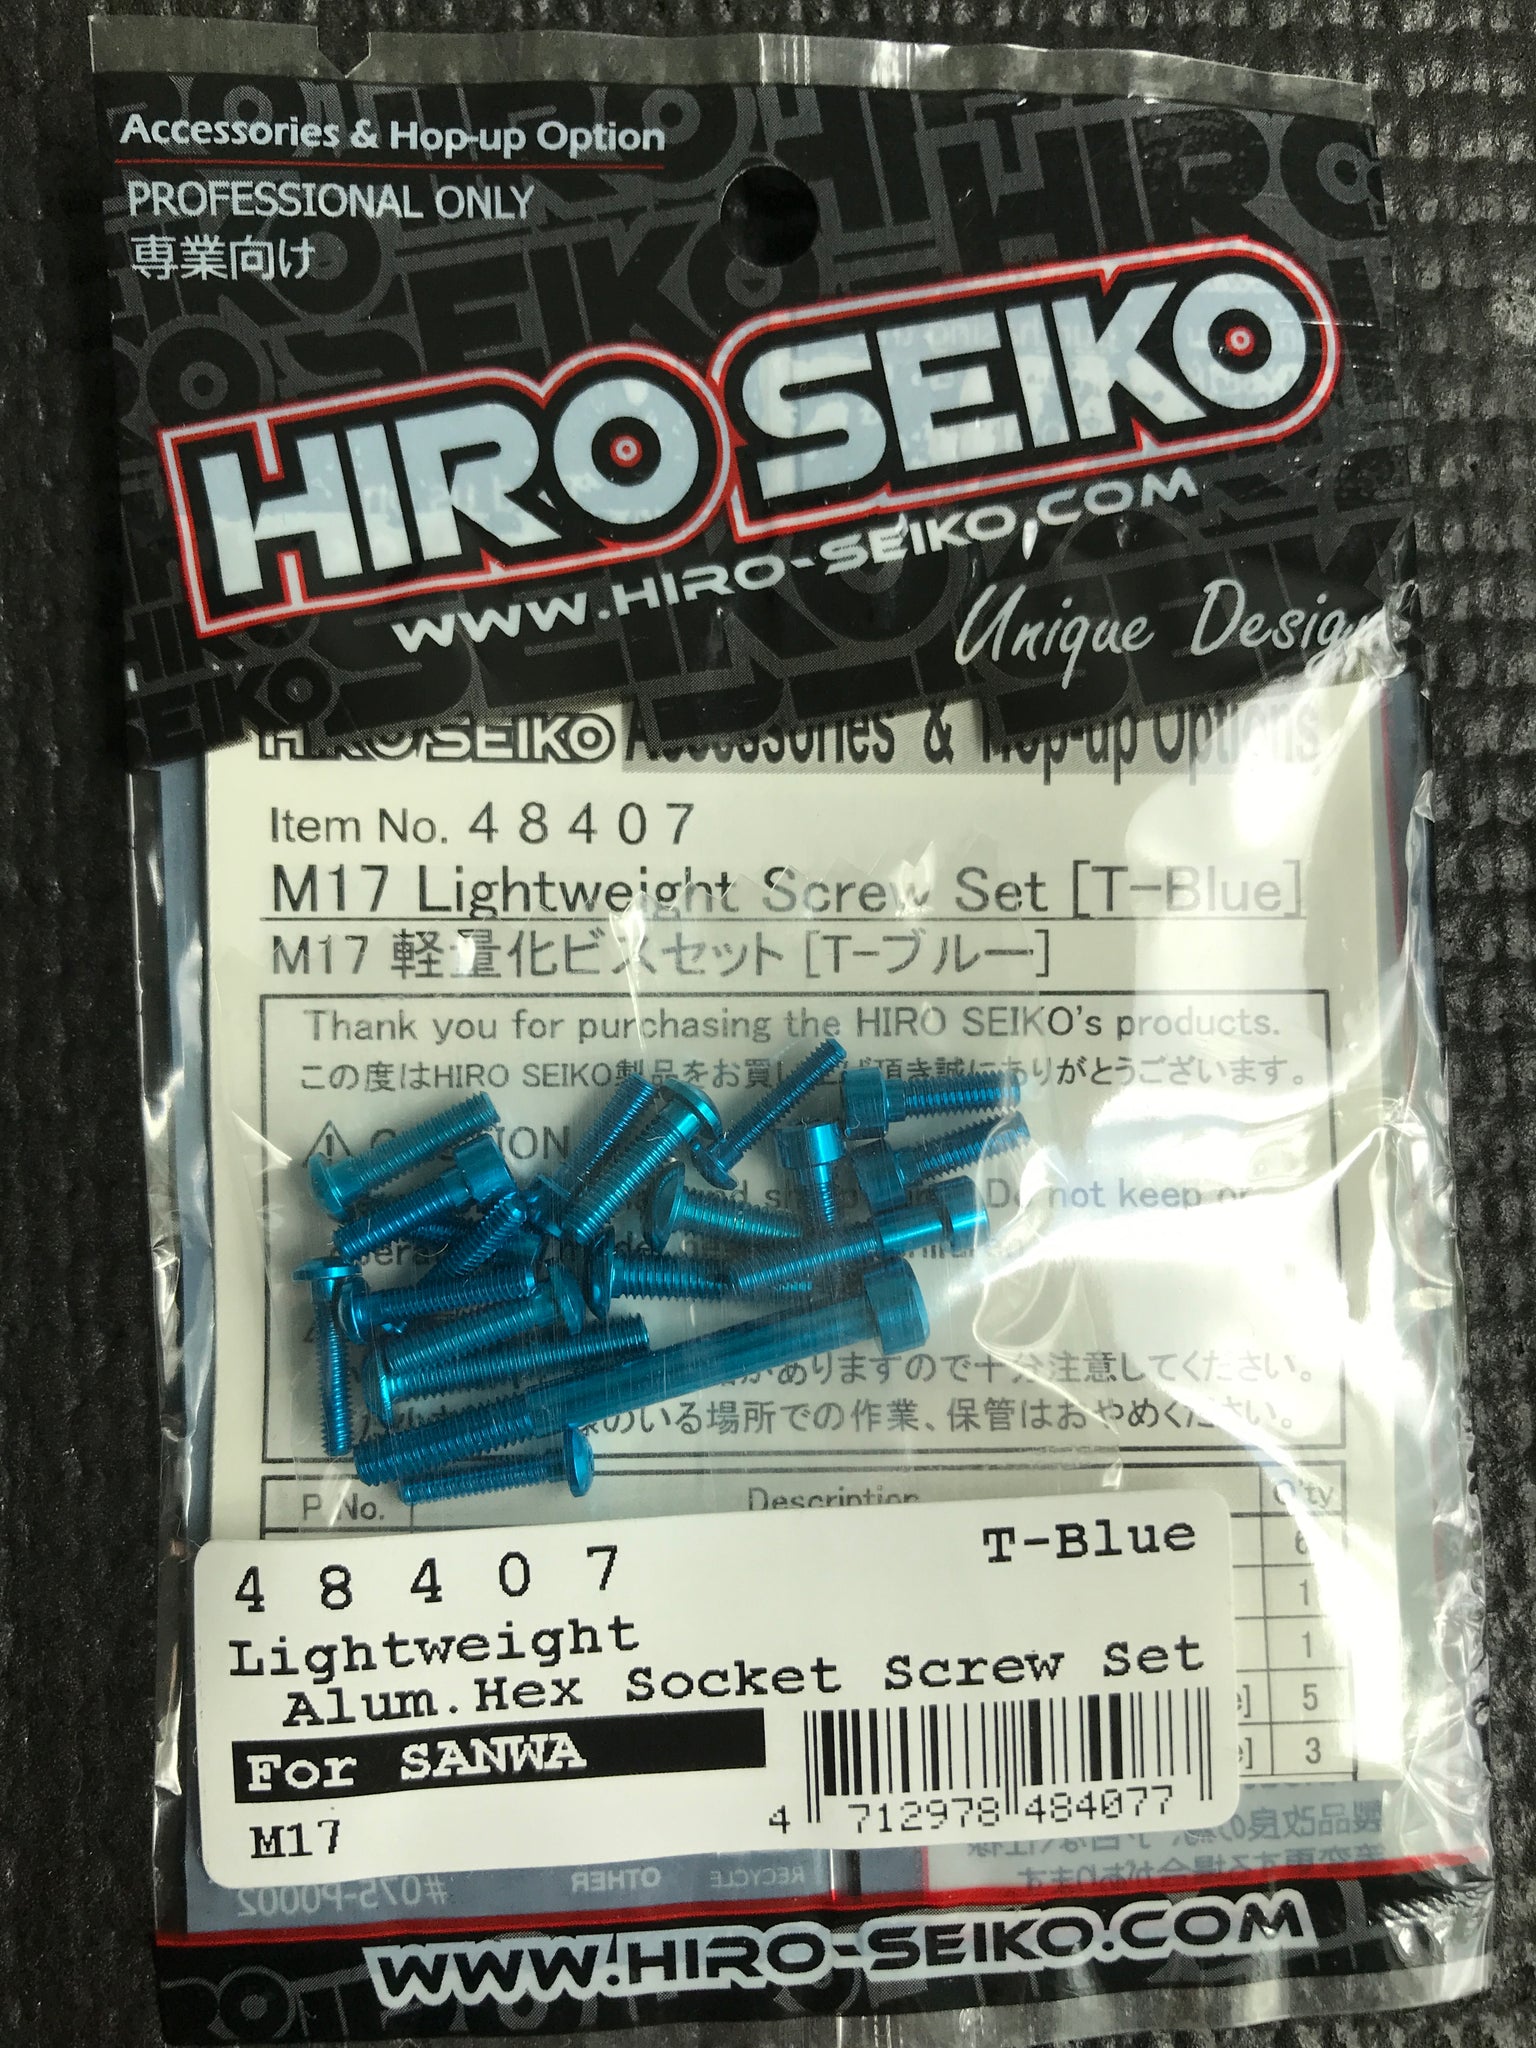 HIRO SEIKO LIGHT WEIGHT SCREW SET FOR SANWA M17 – SUMMIT RC RACING